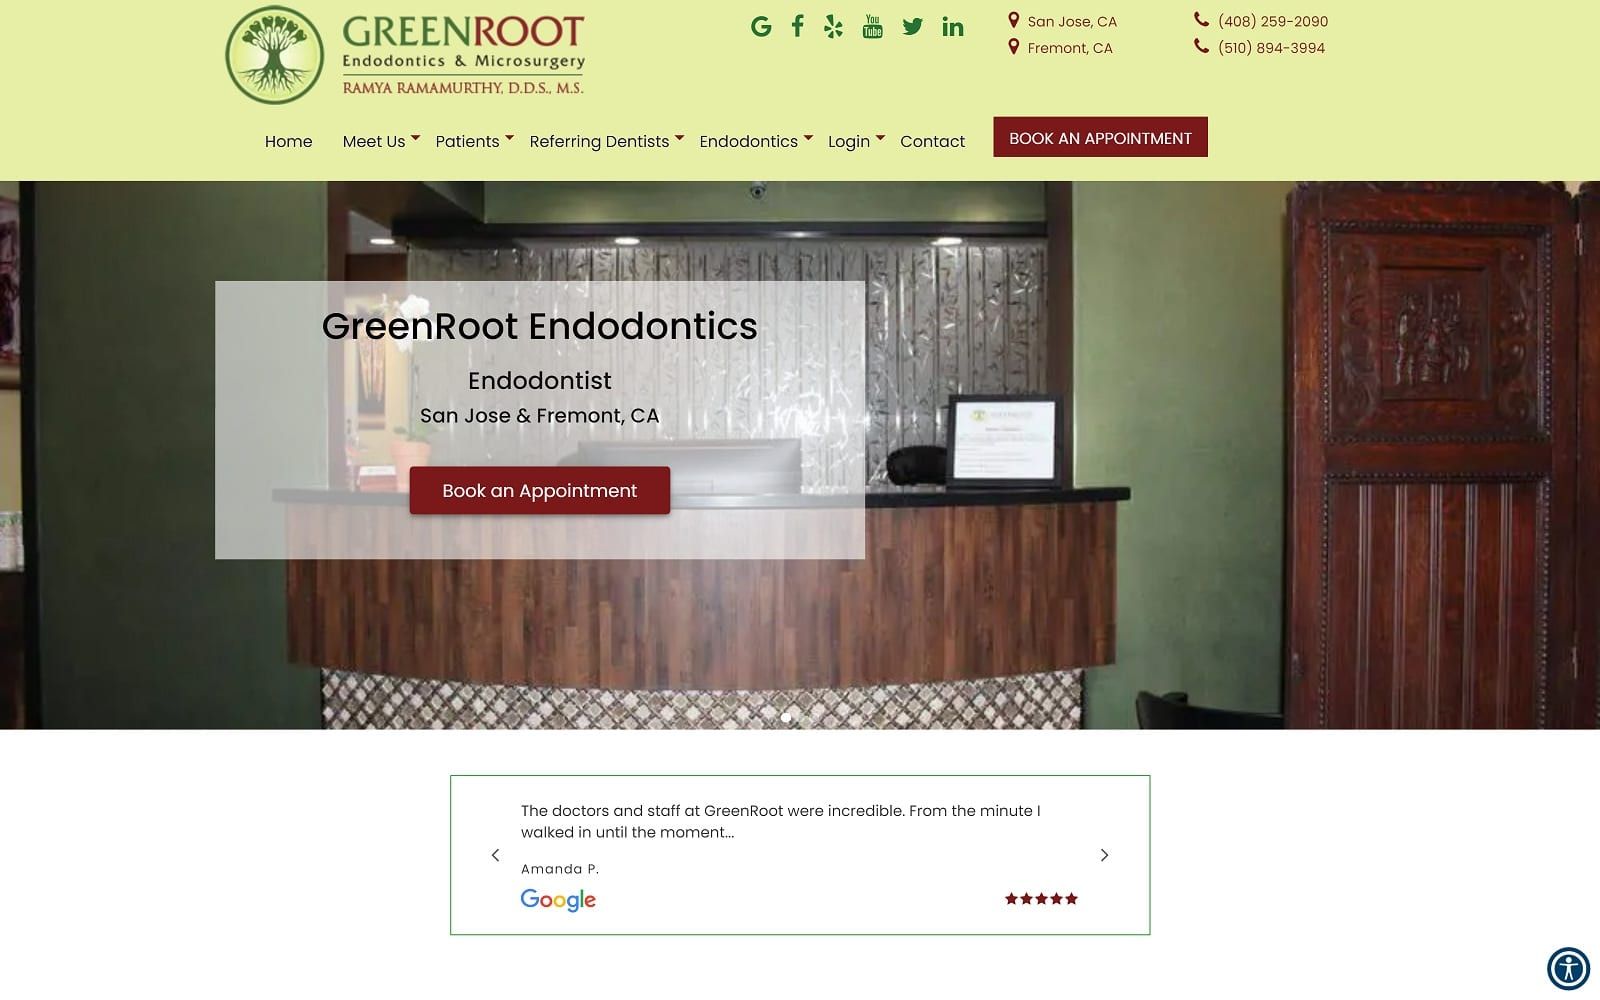 The screenshot of greenroot endodontics & microsurgery dr. Ramya ramamurthy website